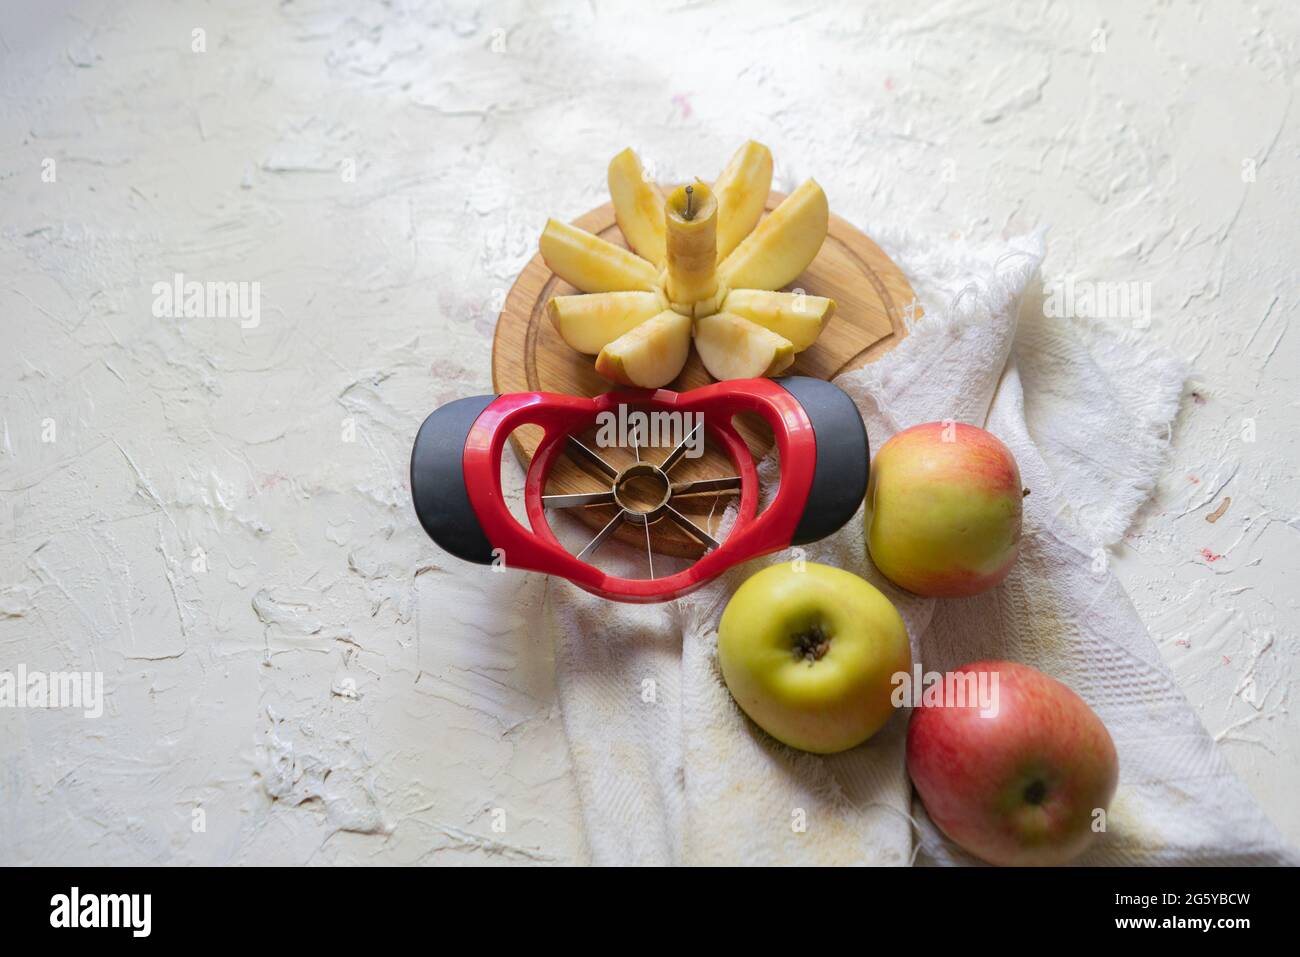 https://c8.alamy.com/comp/2G5YBCW/round-apple-slicer-on-a-board-making-eight-segments-for-breakfast-2G5YBCW.jpg